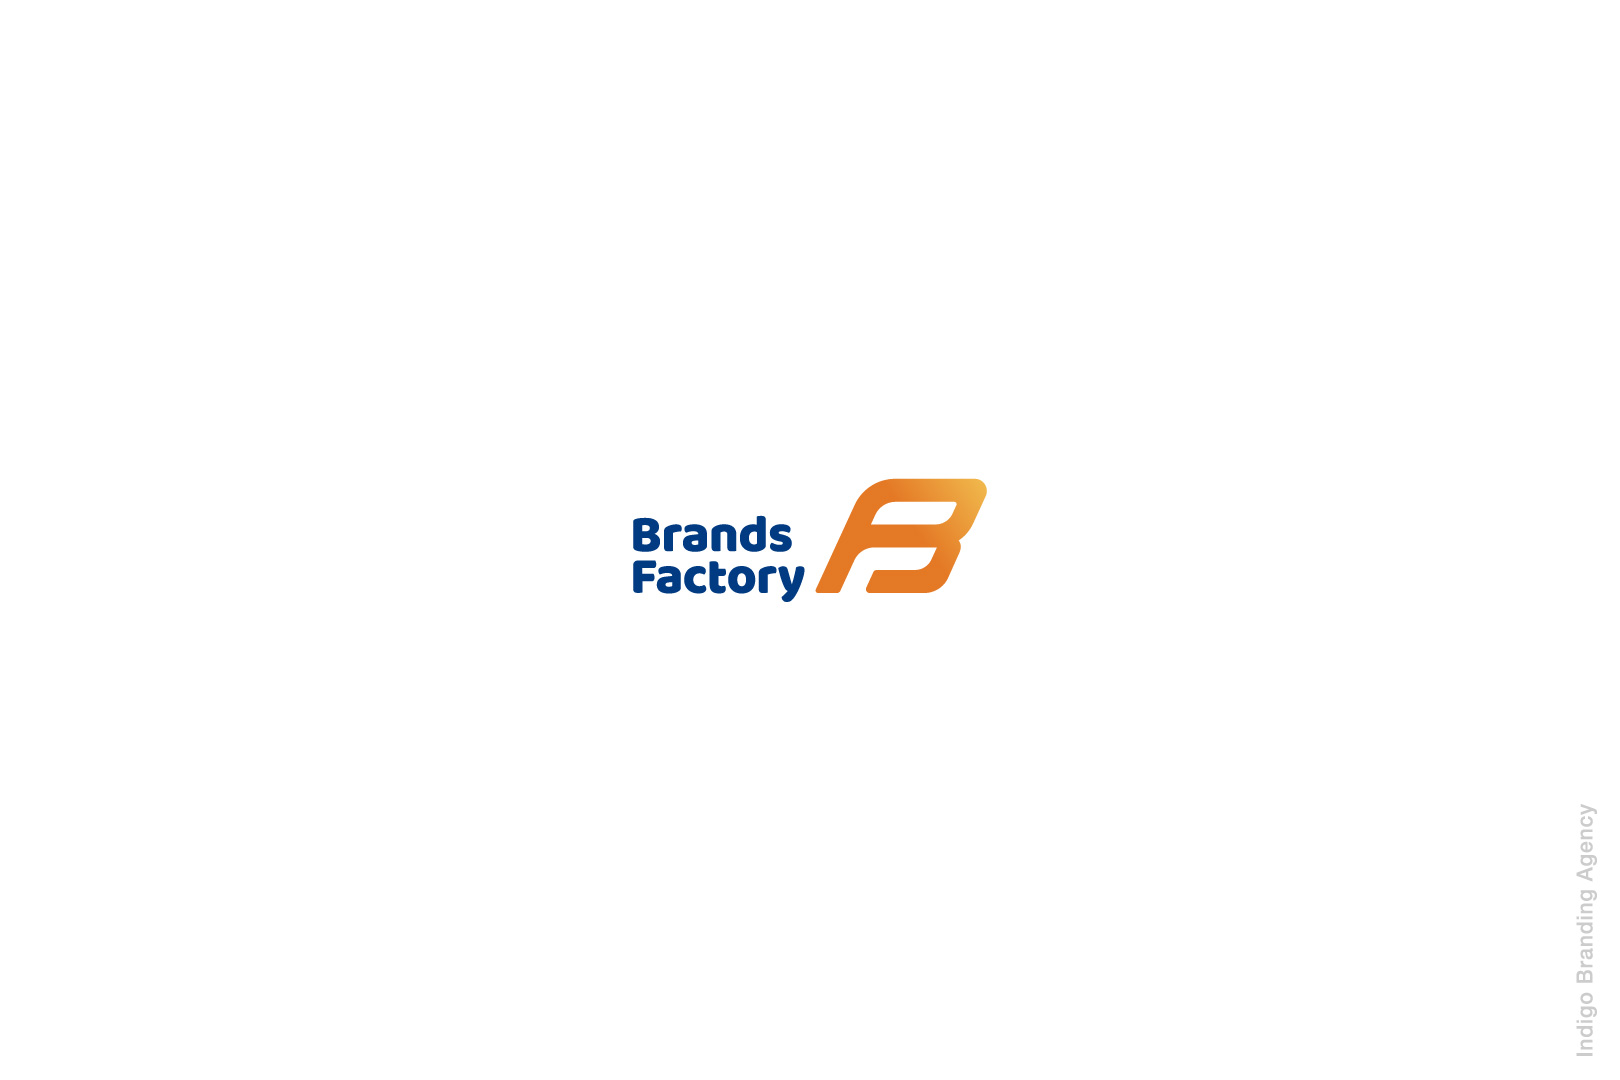 Brands Factory branding and logo in yerevan done by indigo branding